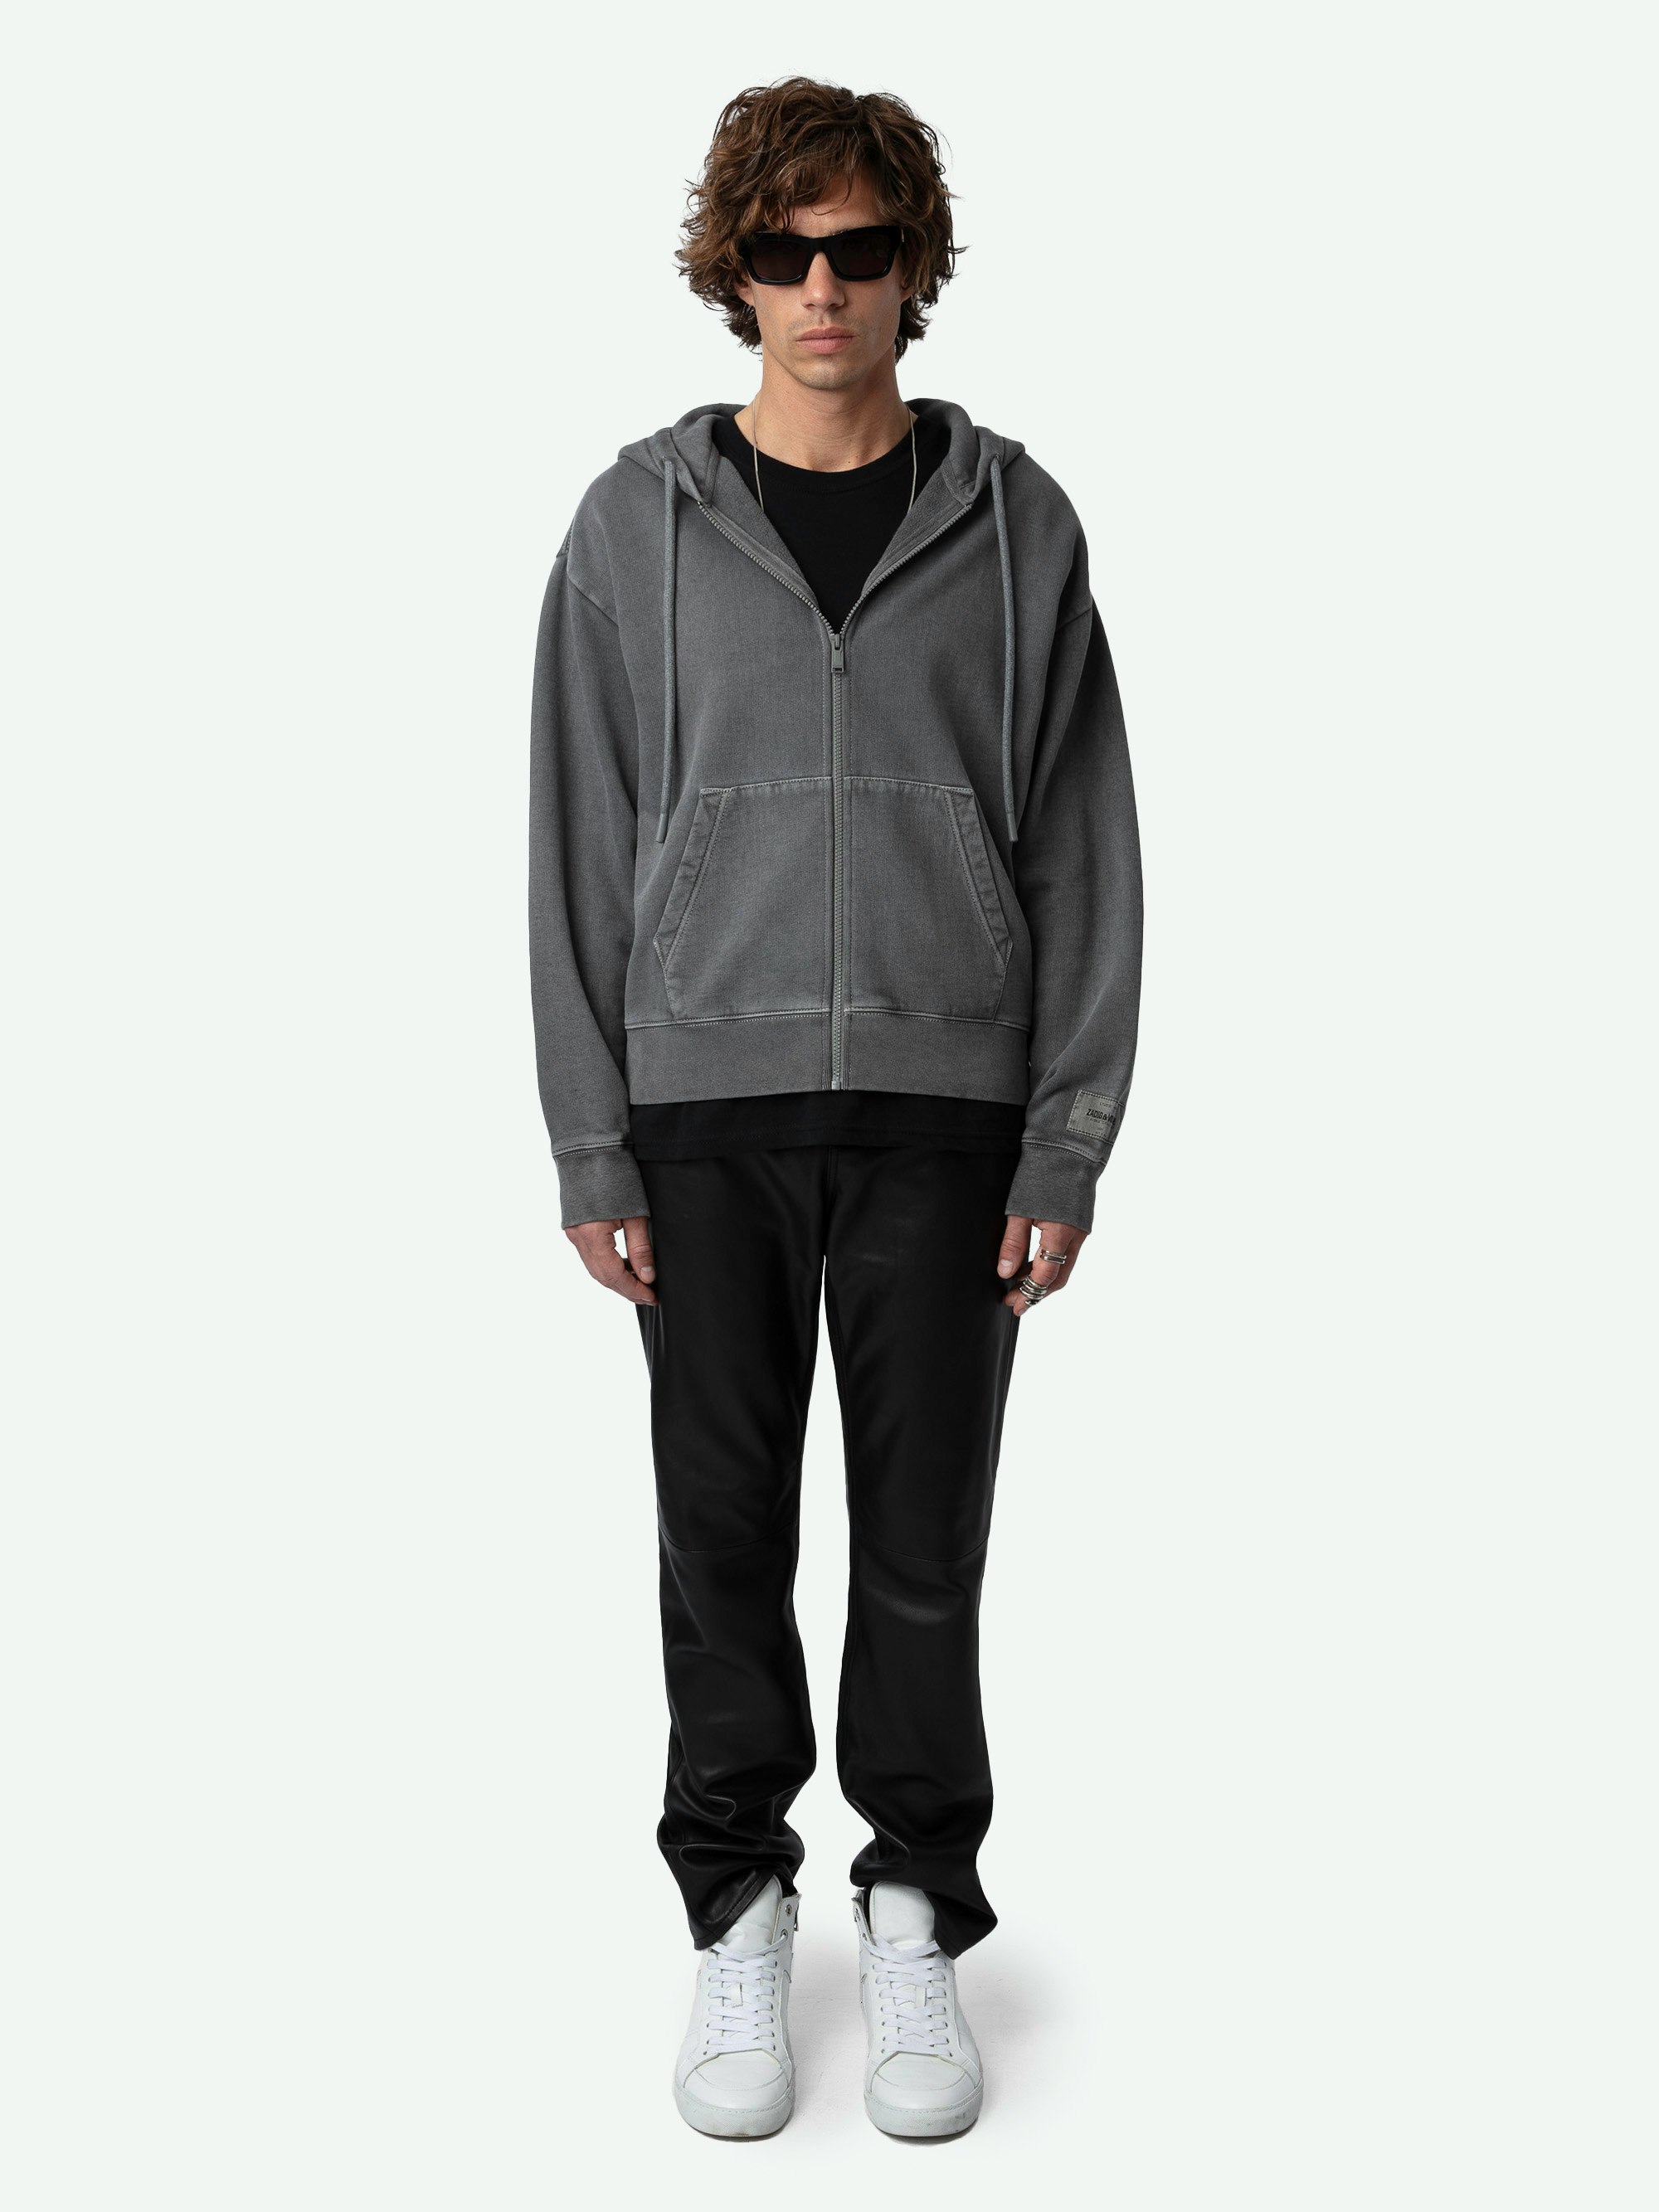 Sacha Sweatshirt - Long-sleeved faded grey organic cotton hooded zip-up sweatshirt with Studio Homme insignia patch.